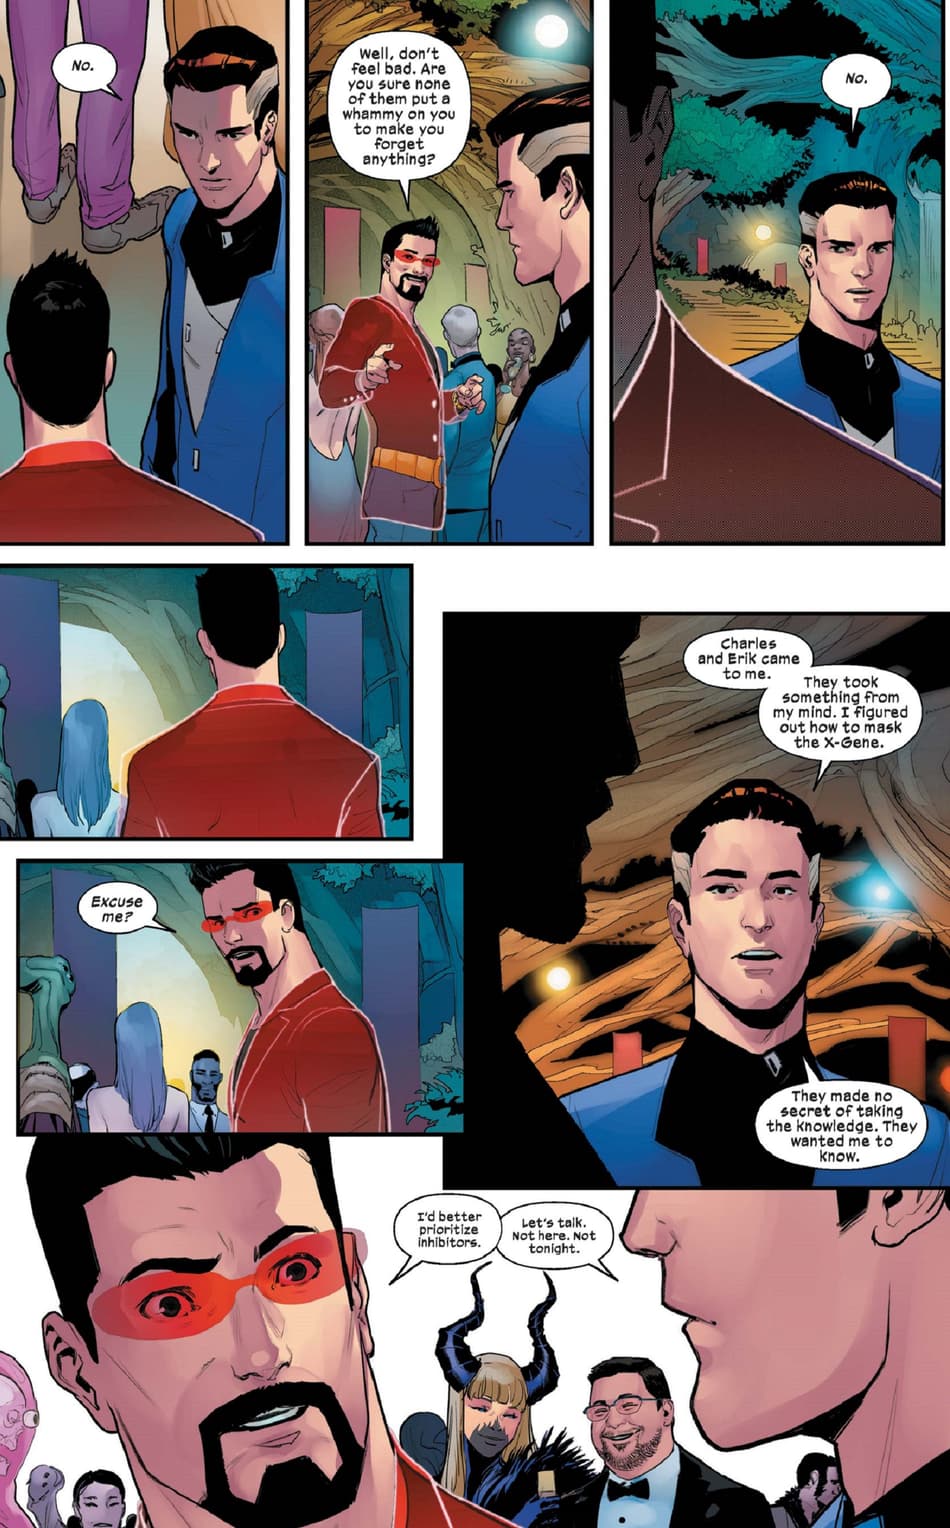 Reed Richards shares a secret with Tony Stark.